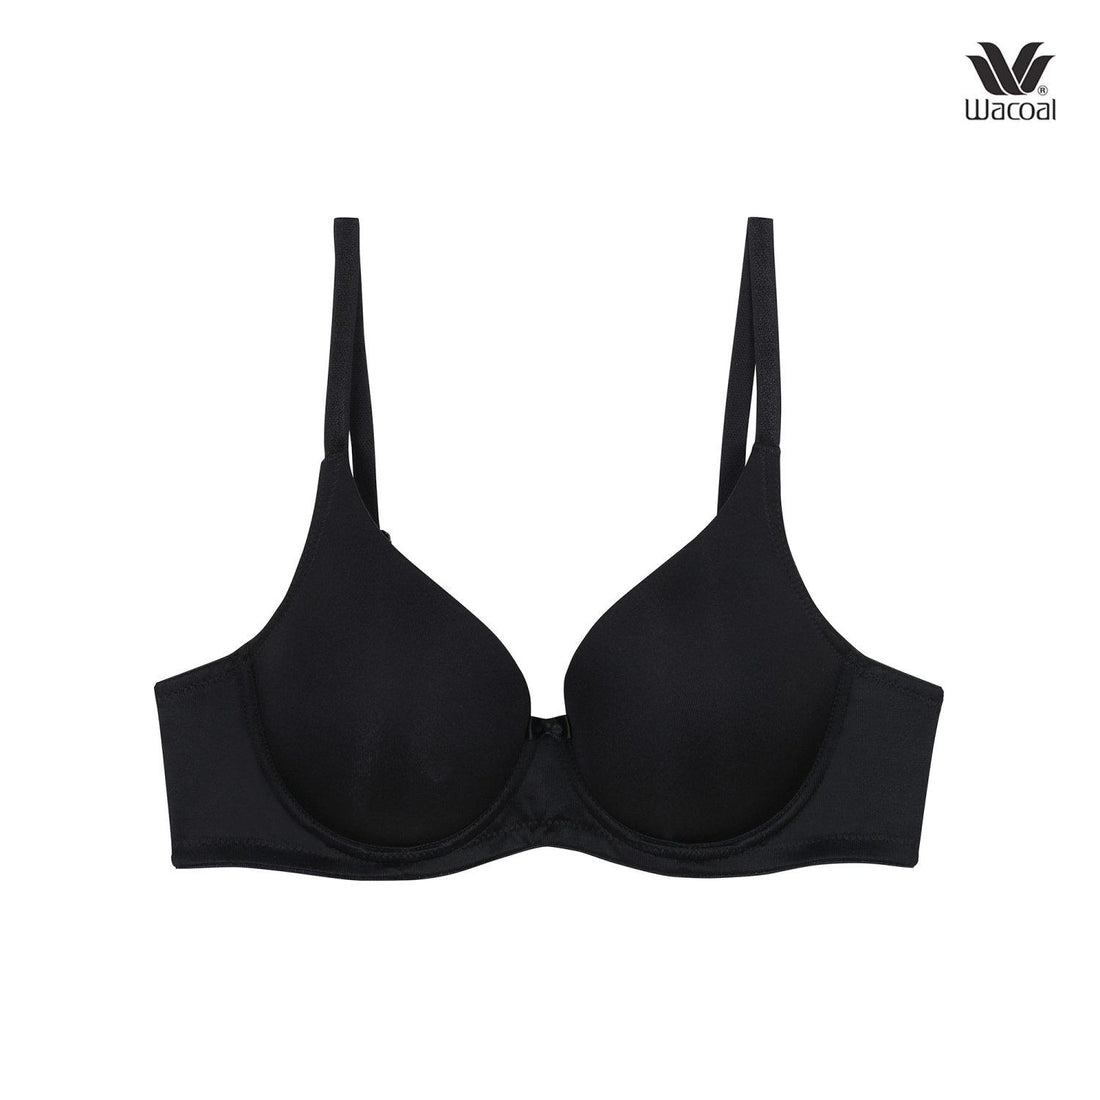 Wacoal Seamless Bra, seamless bra, smooth, comfortable, model WB5A87, black (BL)